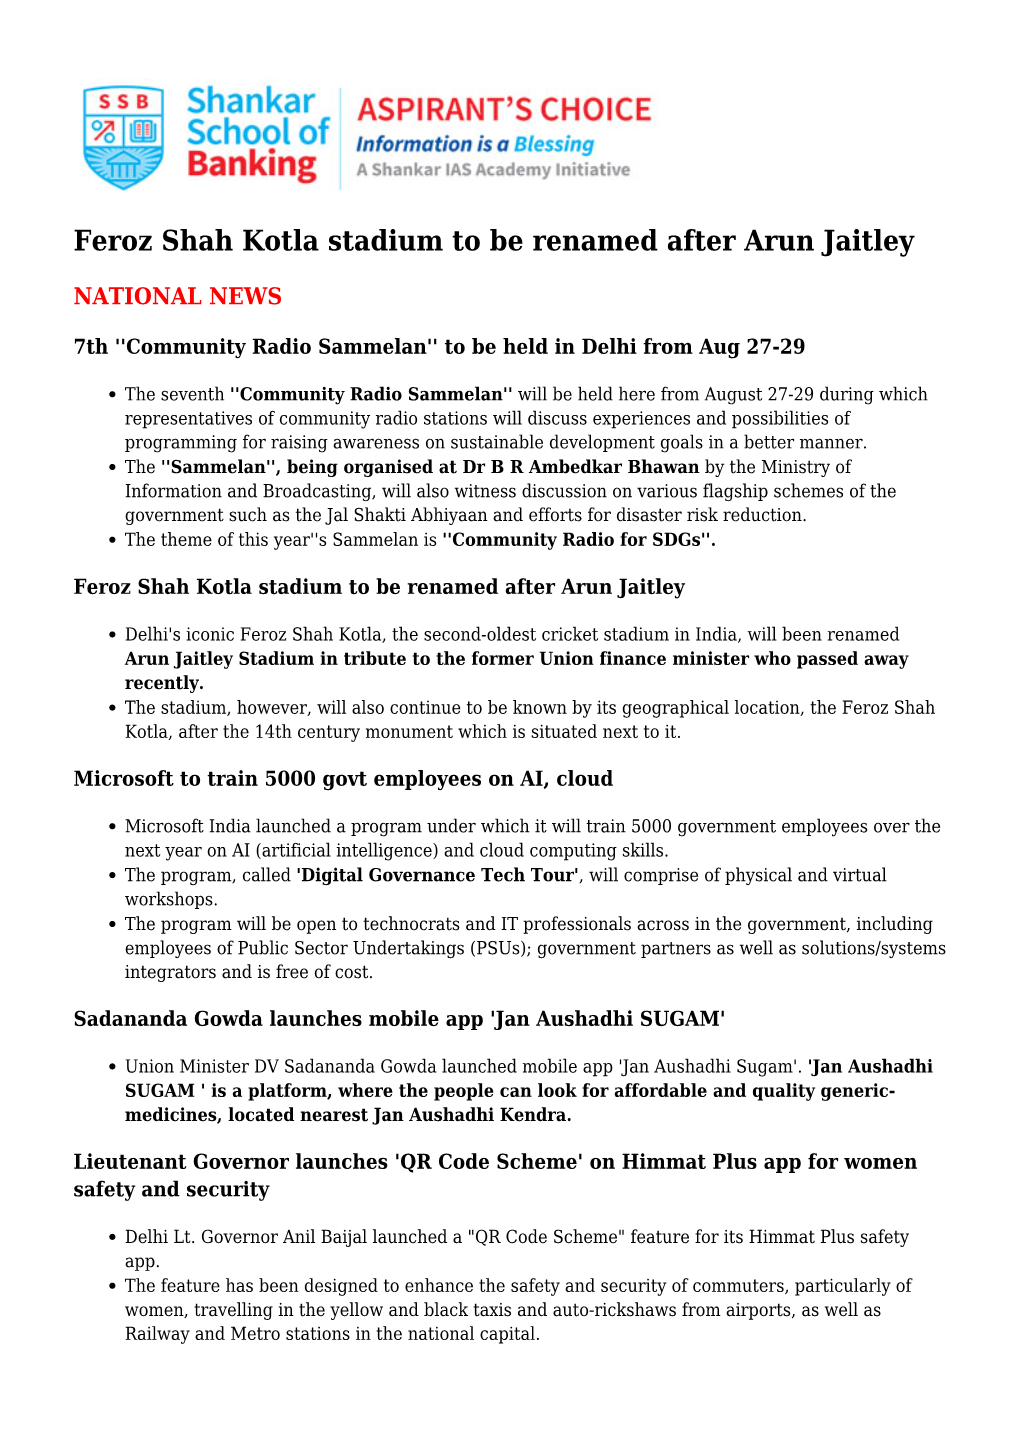 Feroz Shah Kotla Stadium to Be Renamed After Arun Jaitley